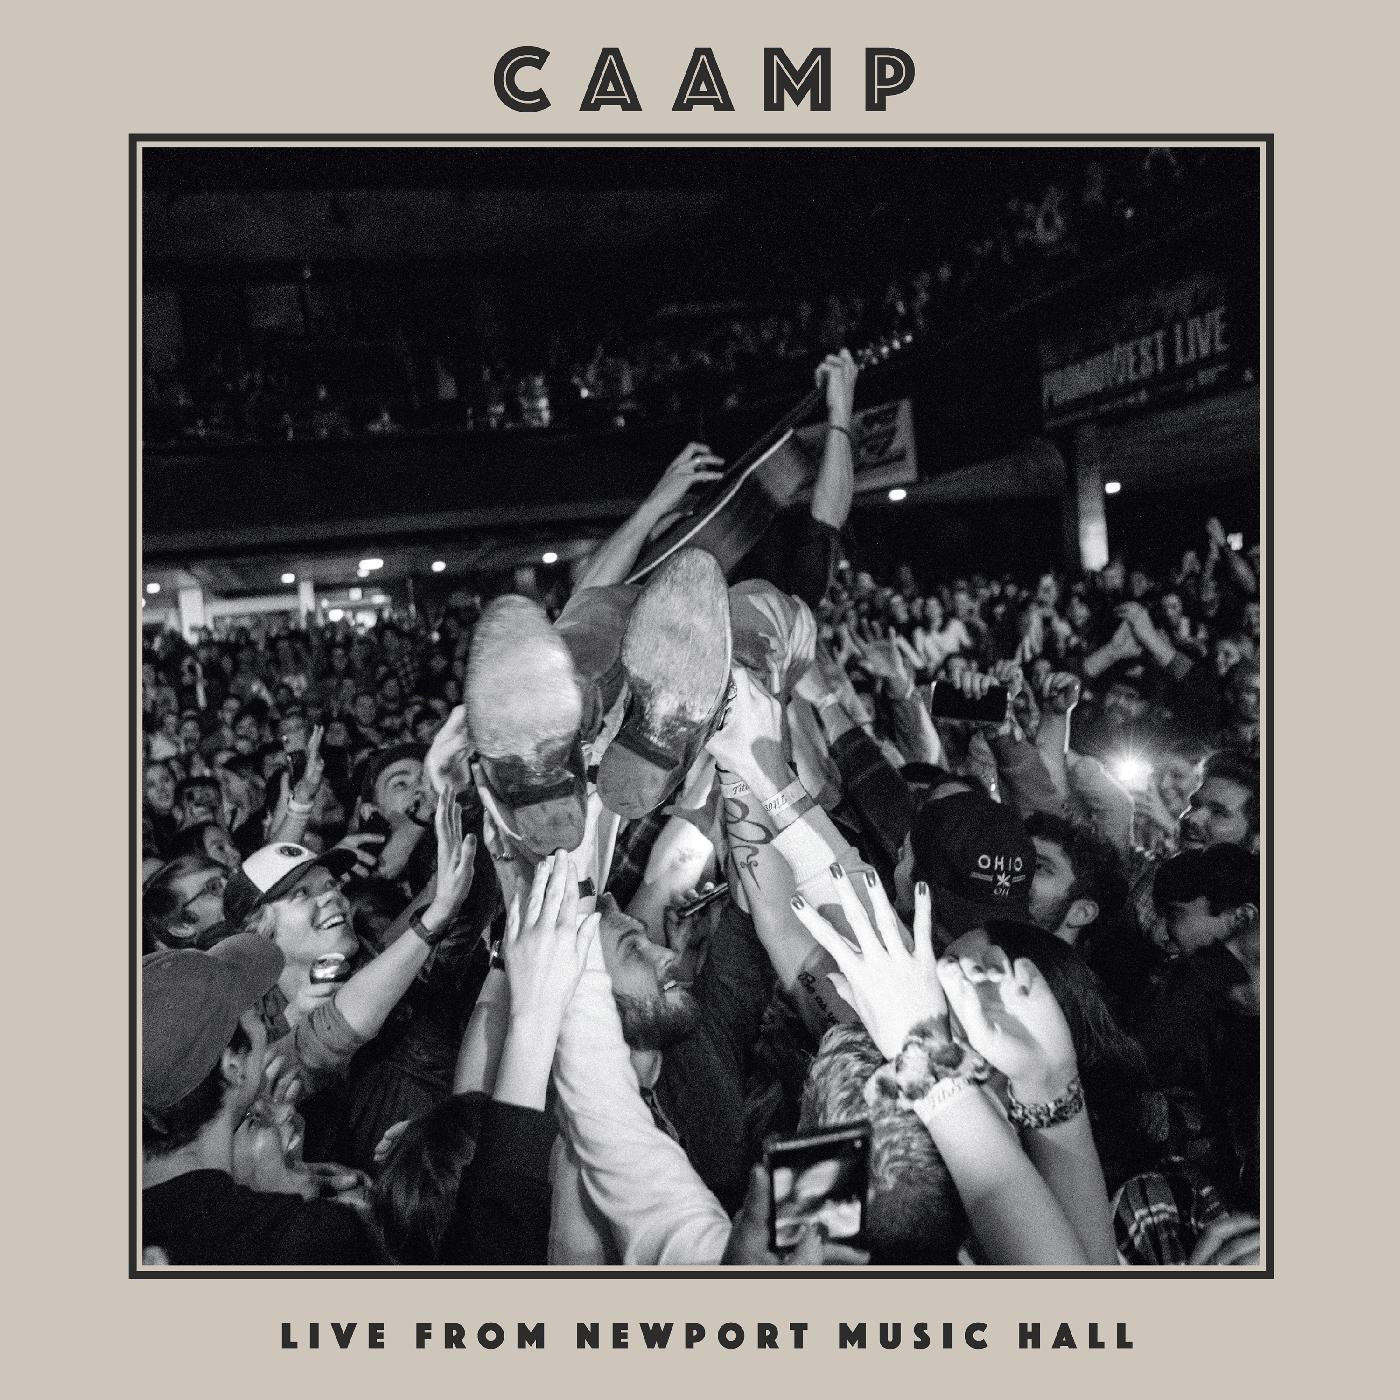 CAAMP - LIVE FROM NEWPORT MUSIC HALL Vinyl LP